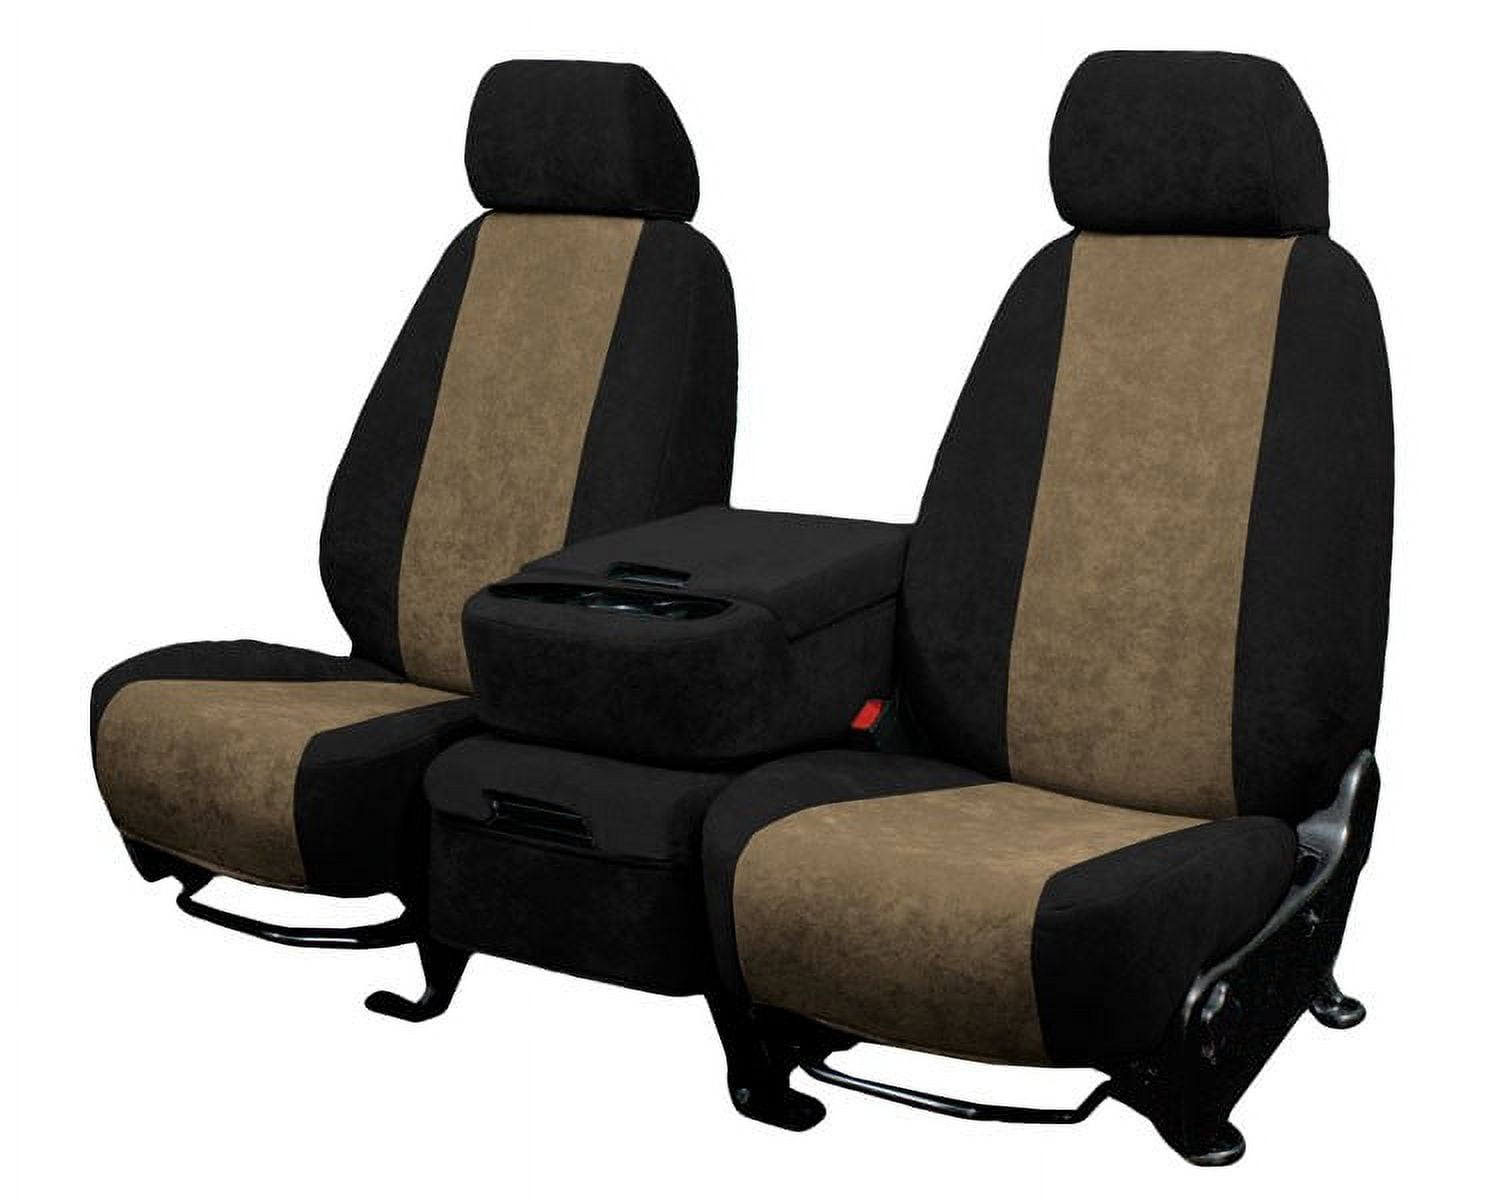 Gmc Savana Seat Cover